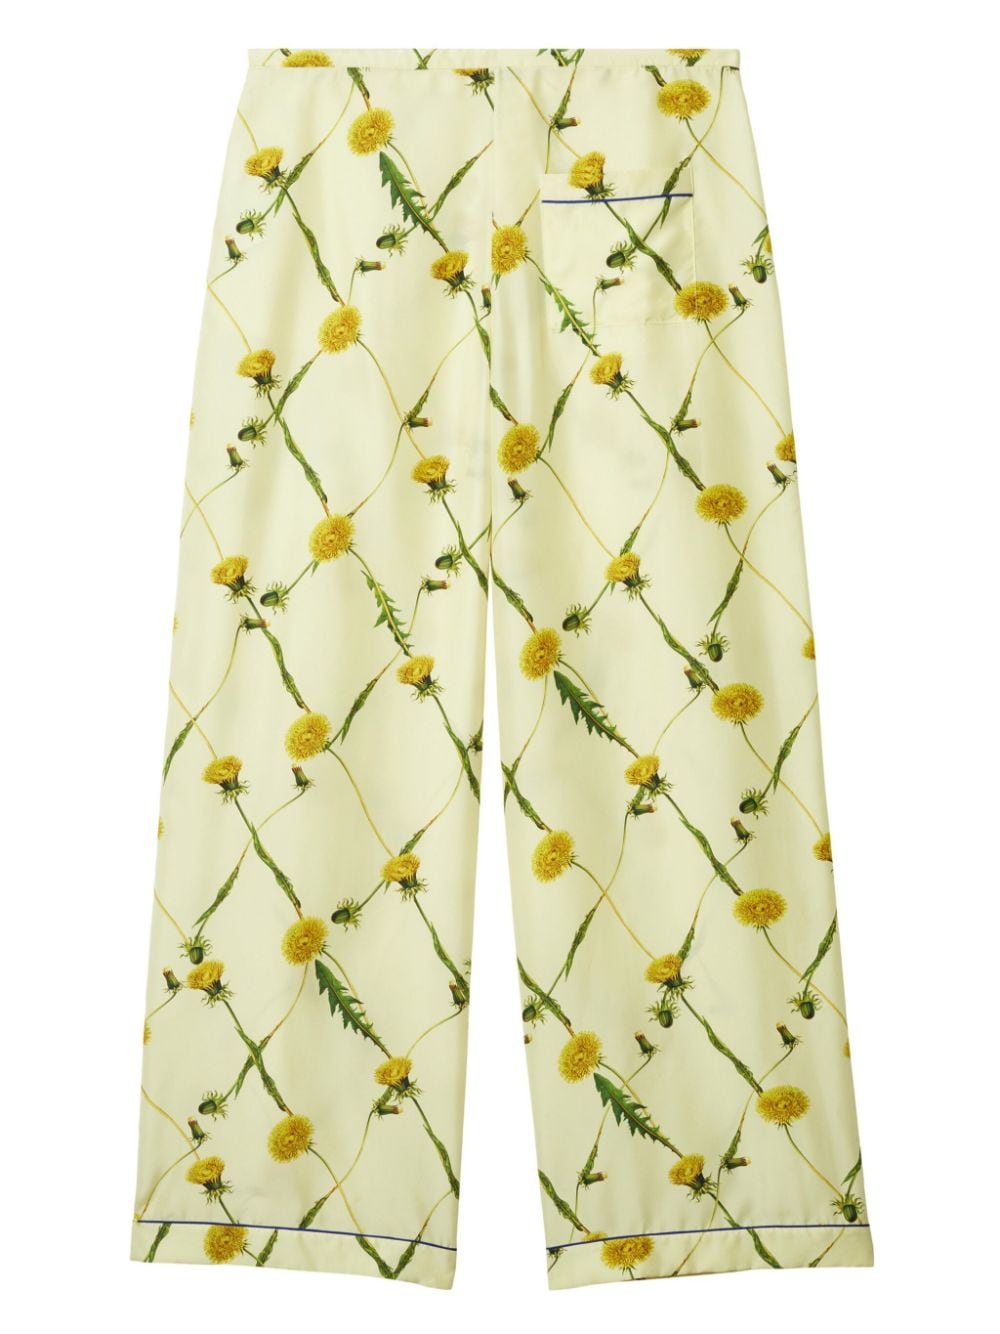 Dandelion-print silk-satin trousers<BR/><BR/><BR/>